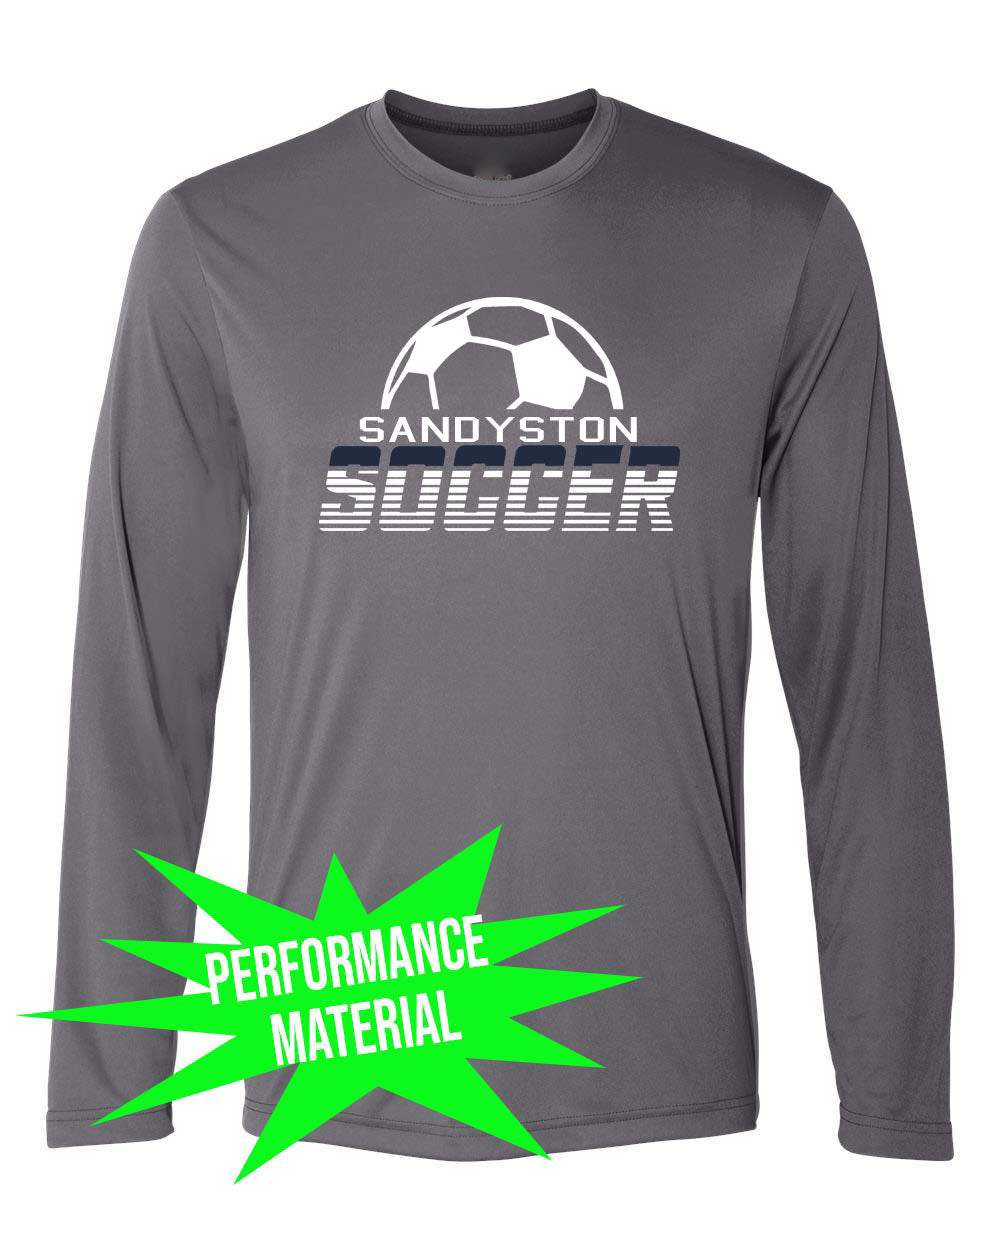 Sandyston Soccer Performance Material Design 3 Long Sleeve Shirt